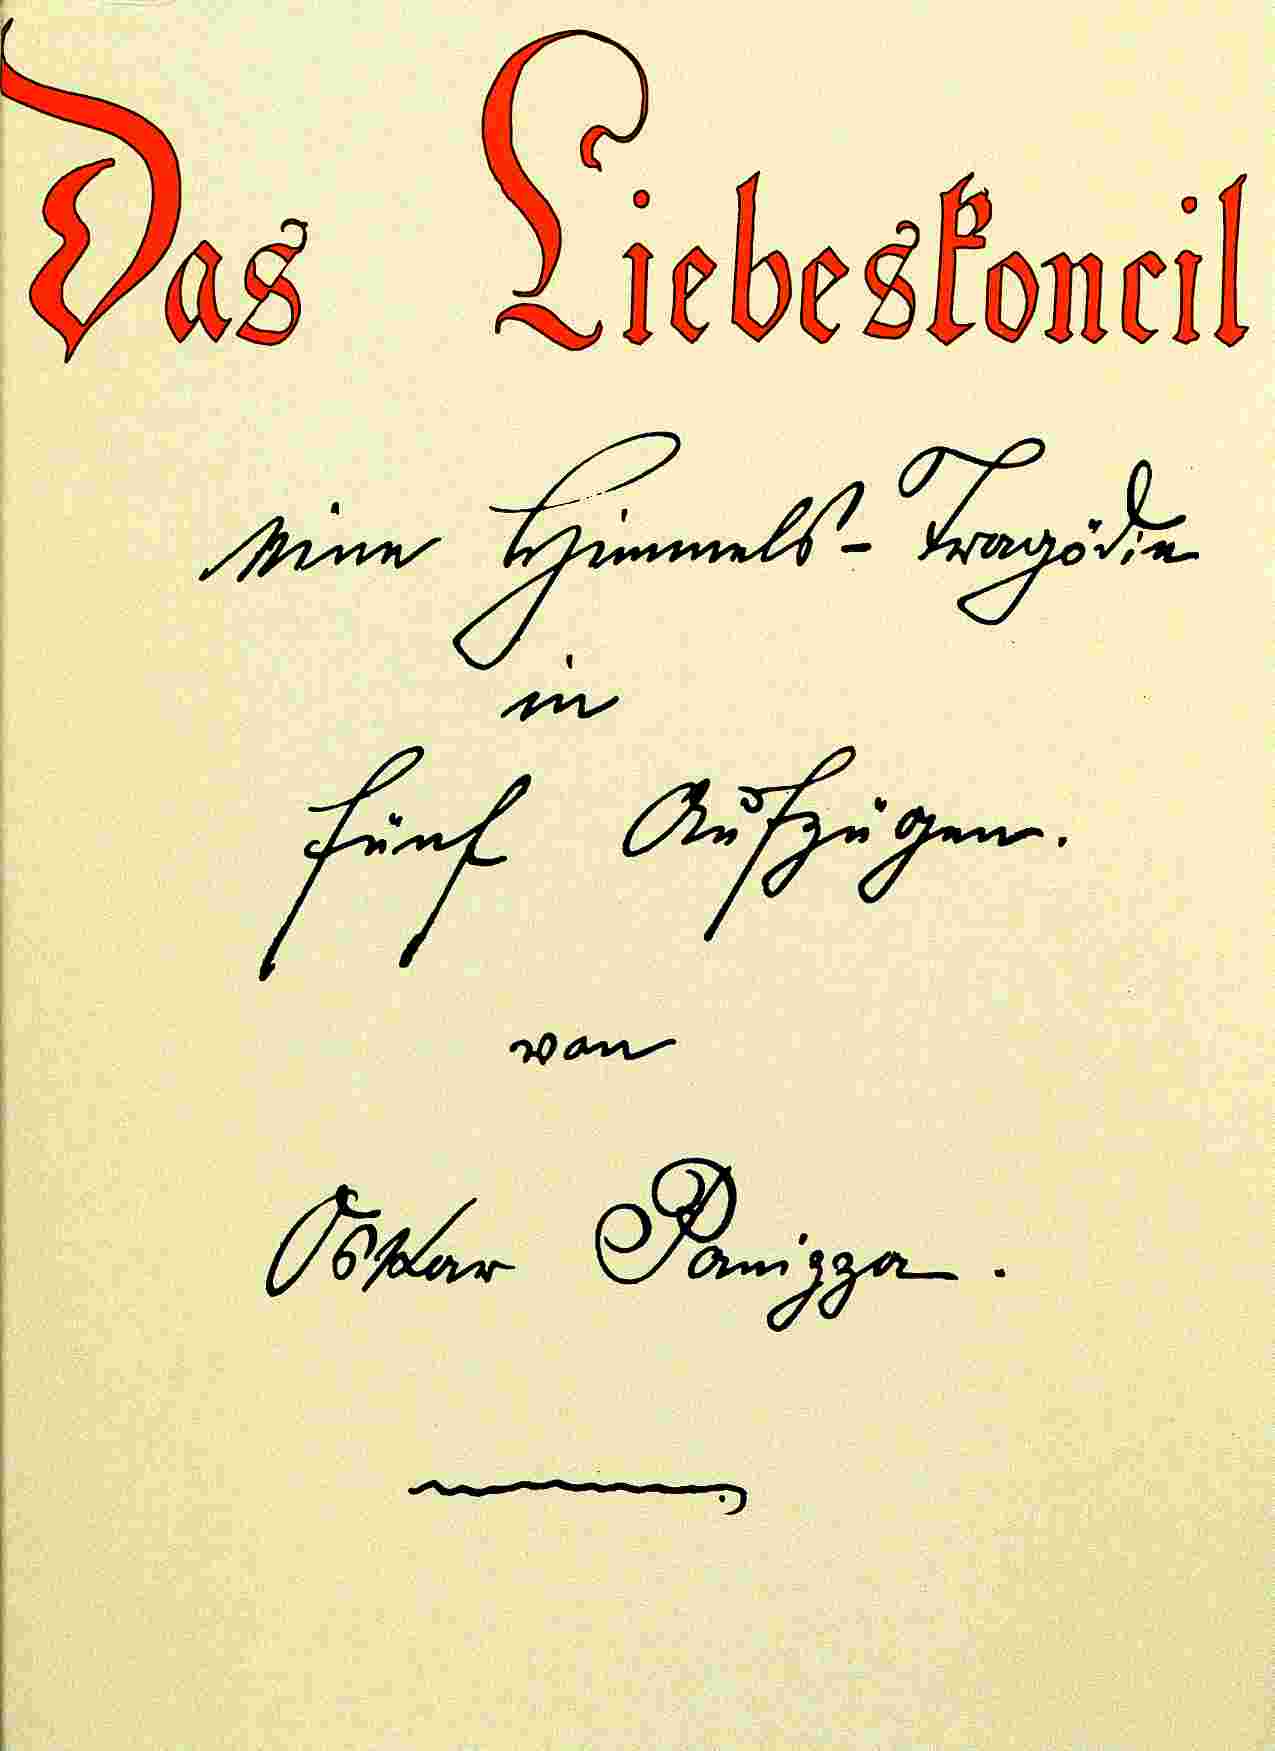 Liebeskoncil manuscript title page